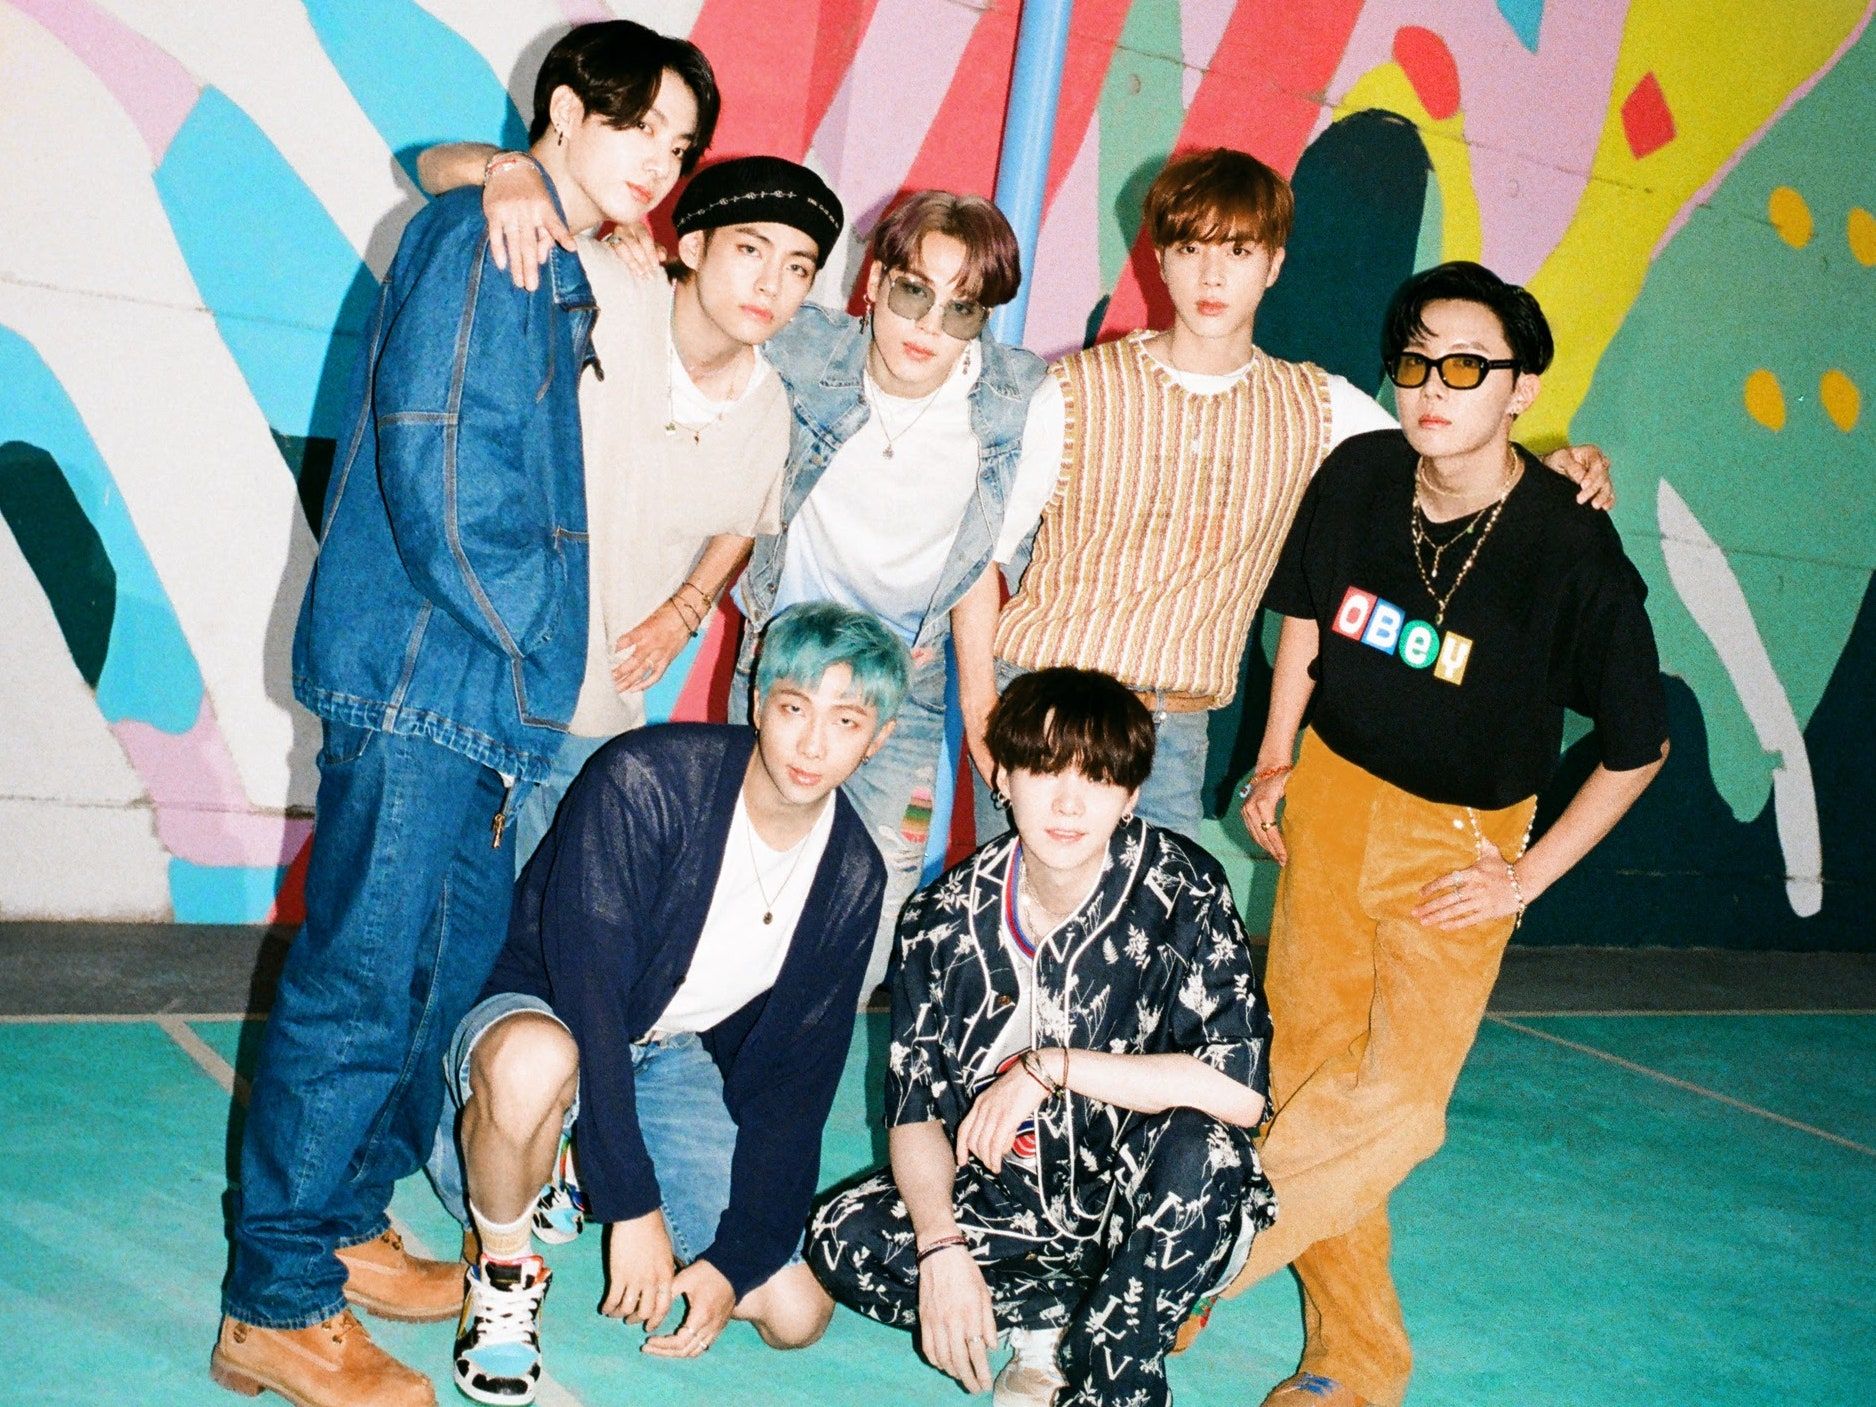 BTS “Dynamite” Teaser Photo Feature New Hair Colors, Retro Nostalgia